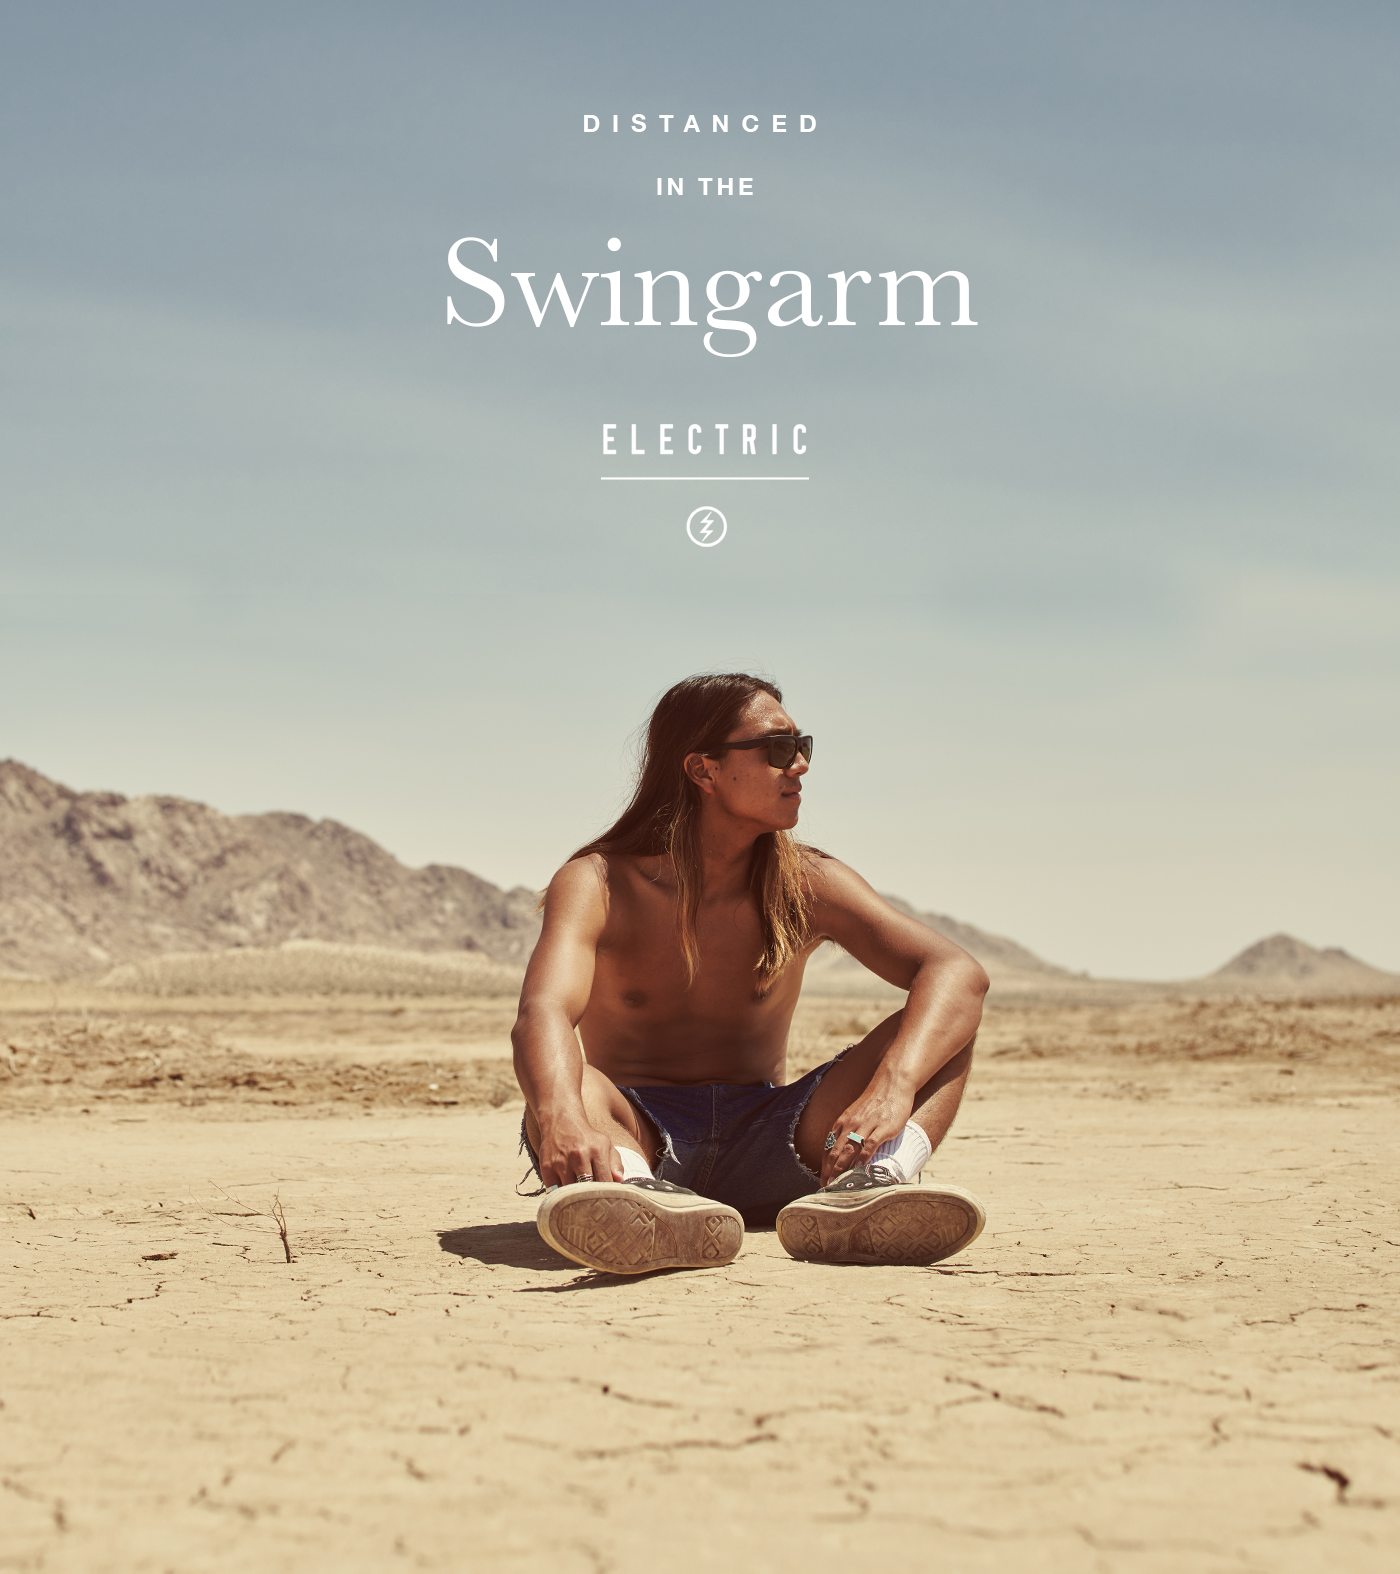 Man Sitting in the desert wearing Swingarm